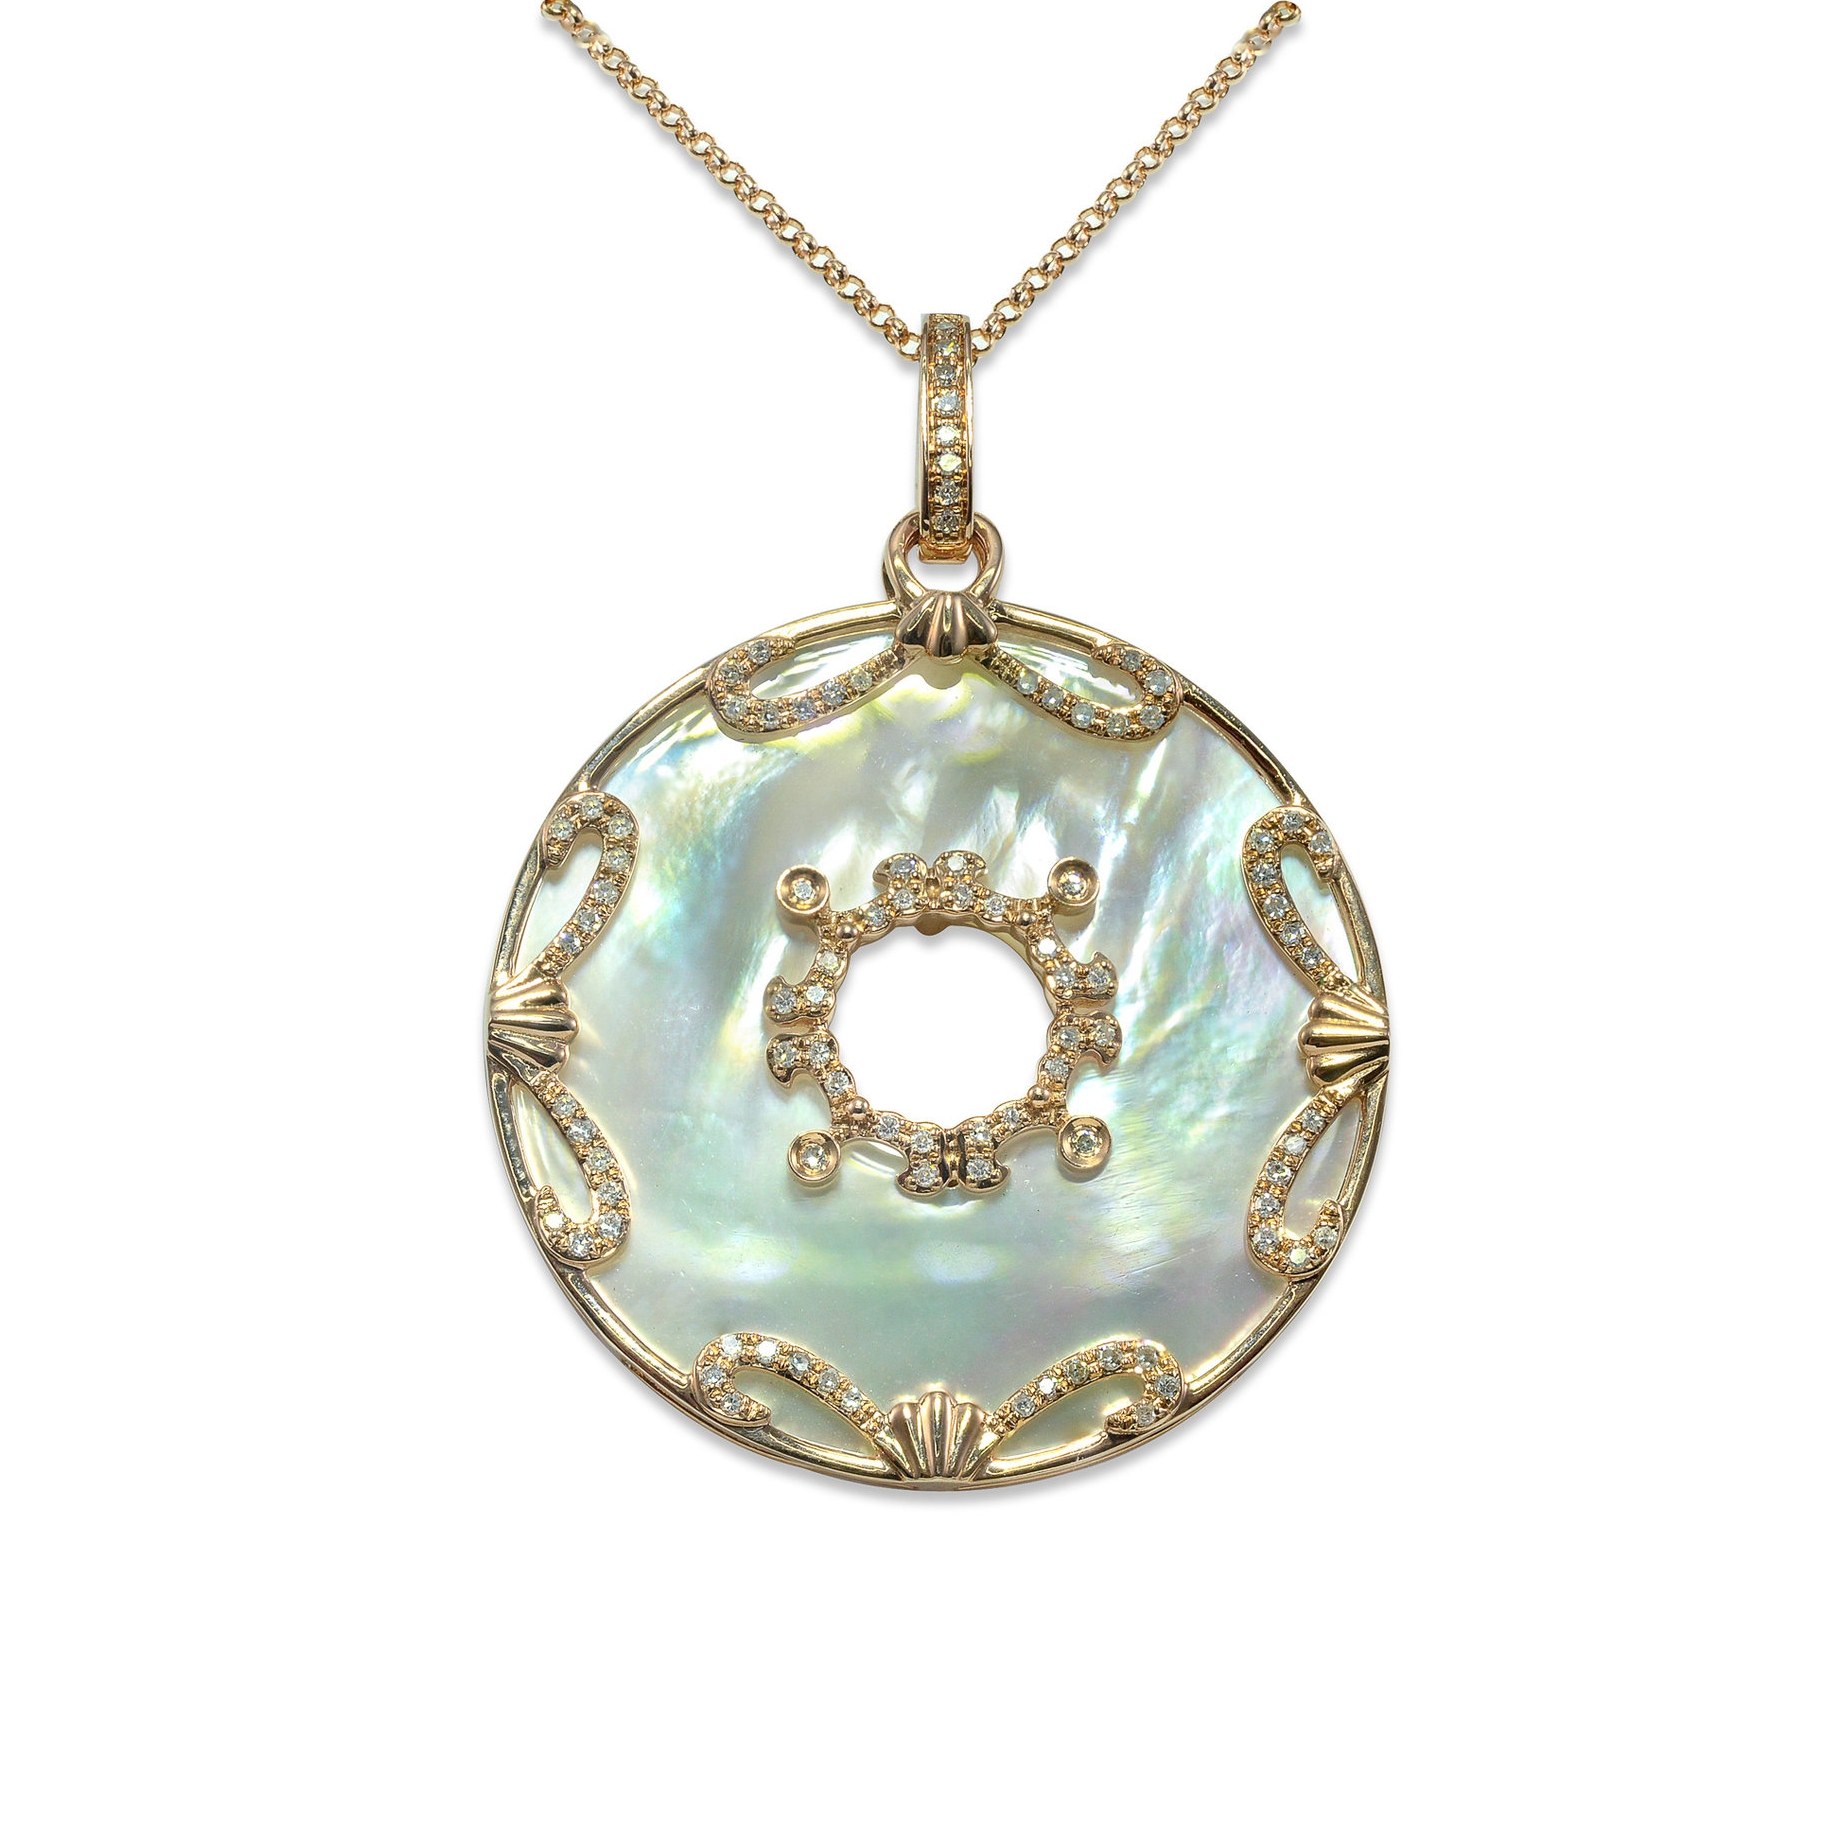 Stella Pink Sapphire Pendant — Steiners Jewelry, San Mateo CA